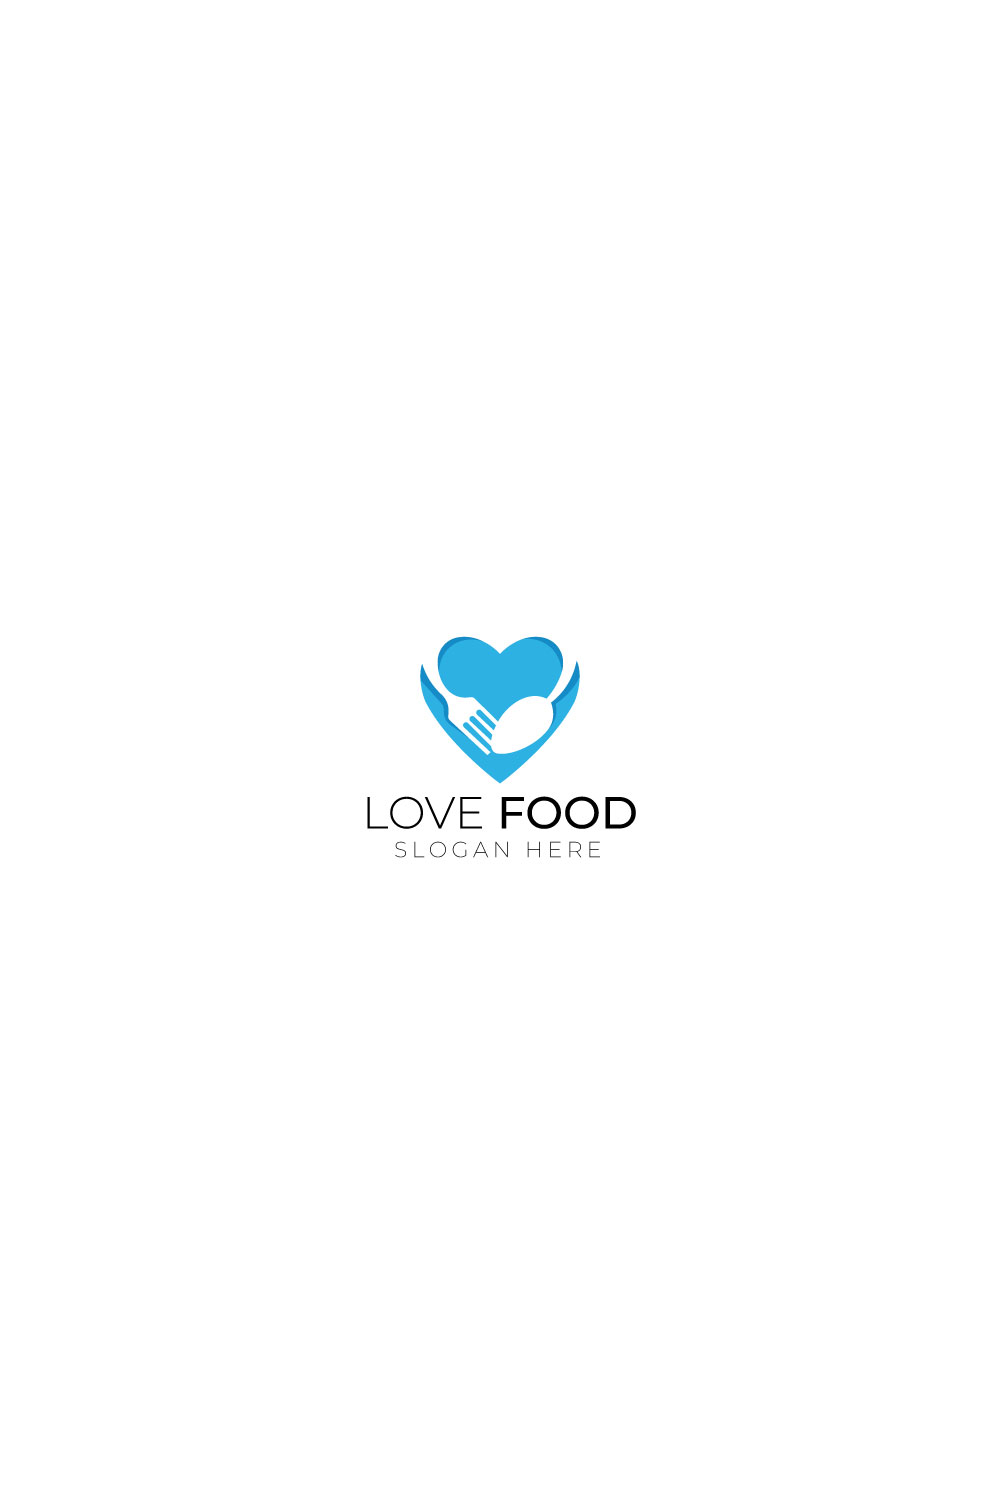 Love Food Restaurant Logo pinterest preview image.